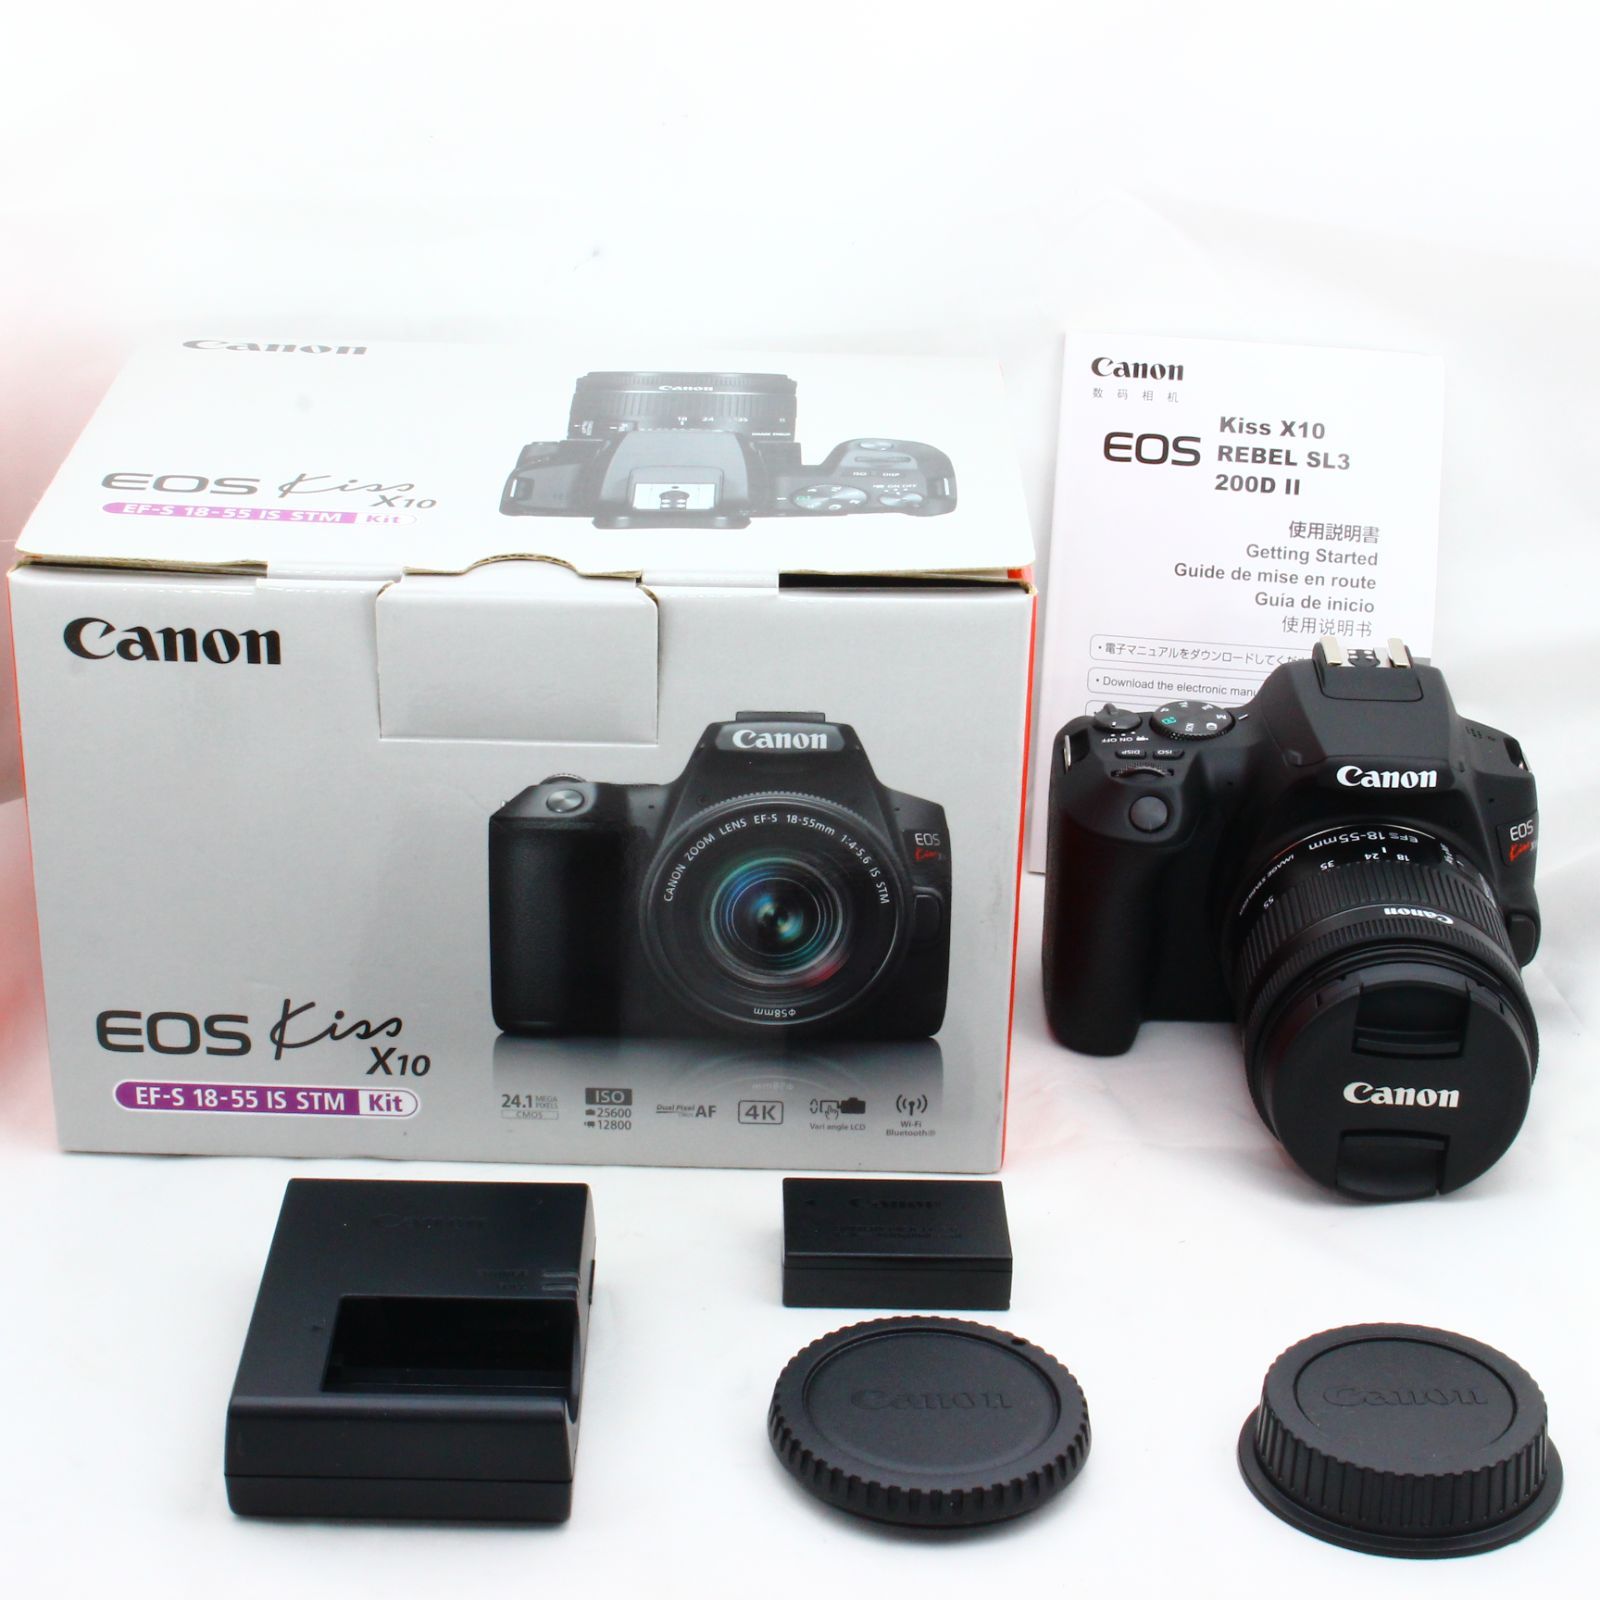 Canon デジタル一眼レフカメラ EOS Kiss X10 標準ズームキット ブラック KISSX10BK-1855ISSTMLK - 3